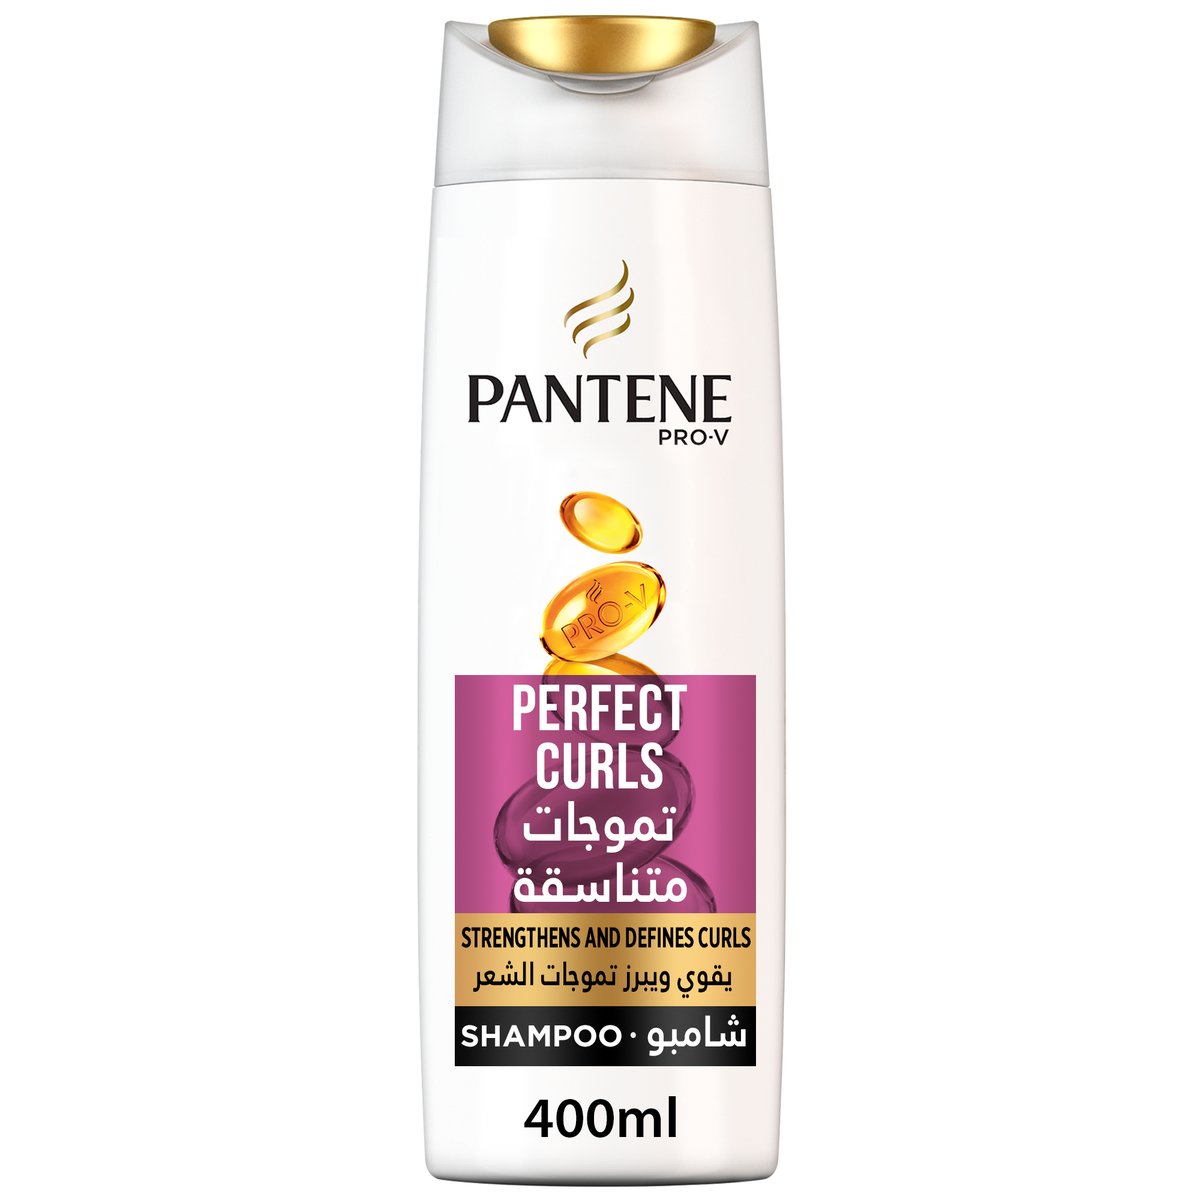 Pantene Pro-V Perfect Curls Shampoo 400ml